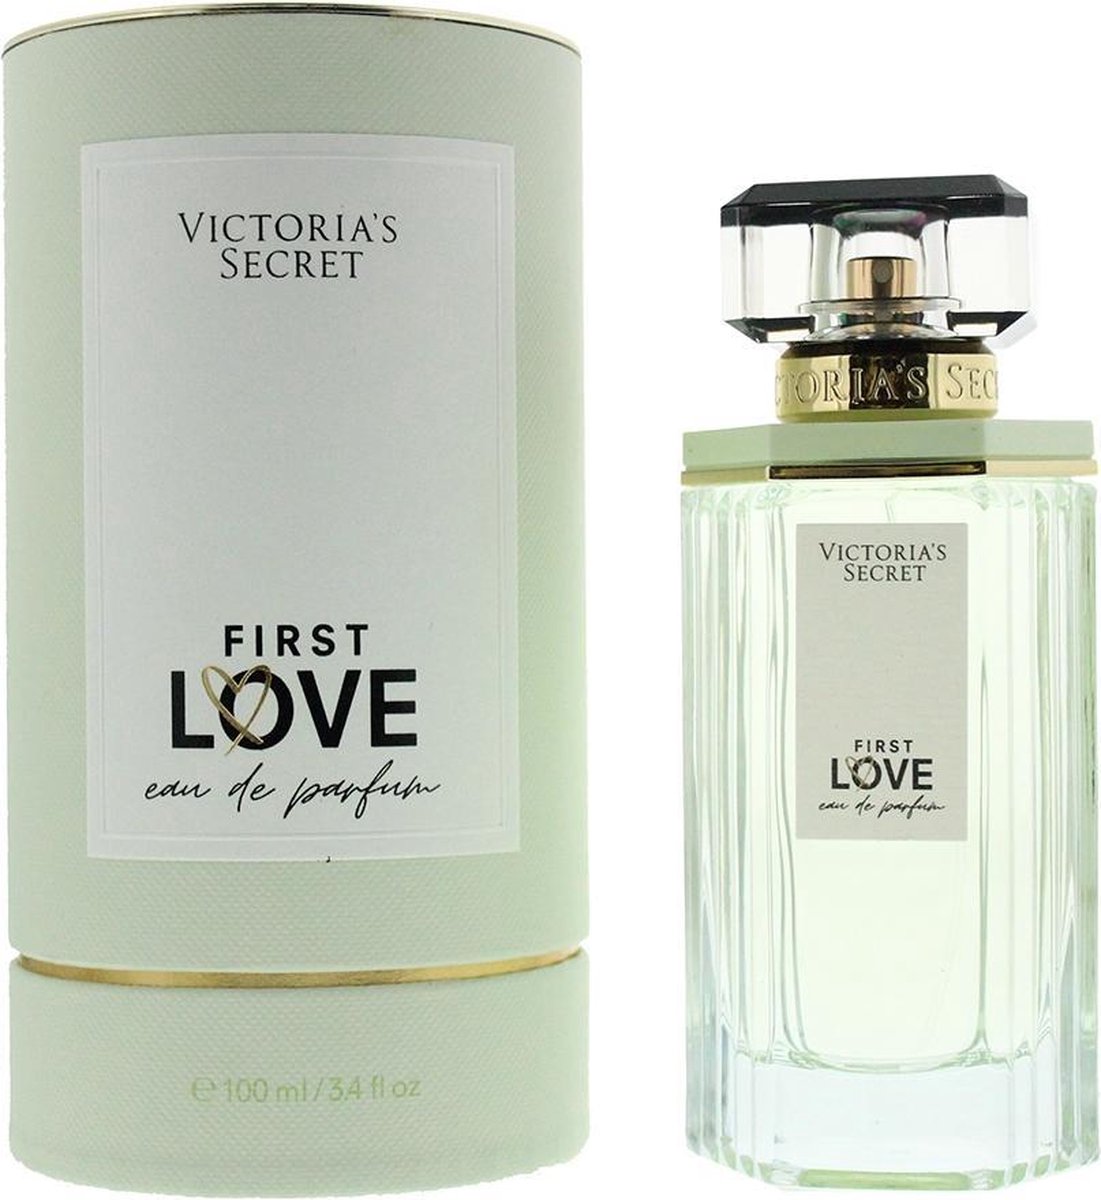 VICTORIA'S SECRET - FIRST LOVE